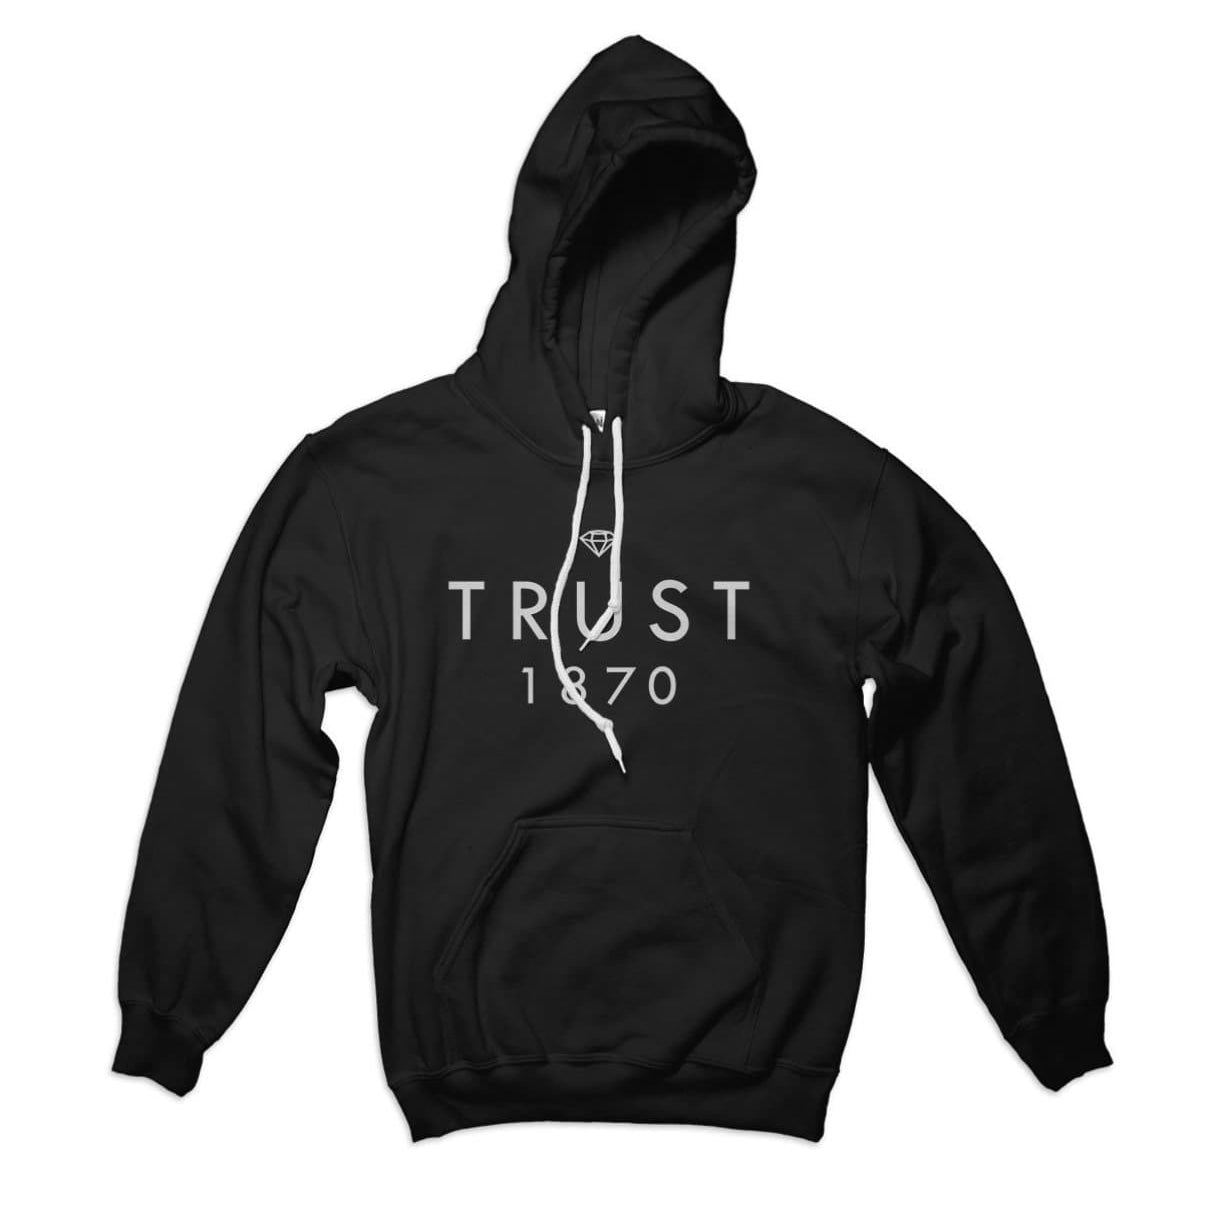 Trust 1870 Sweatshirt Trust 1870 Hoodie